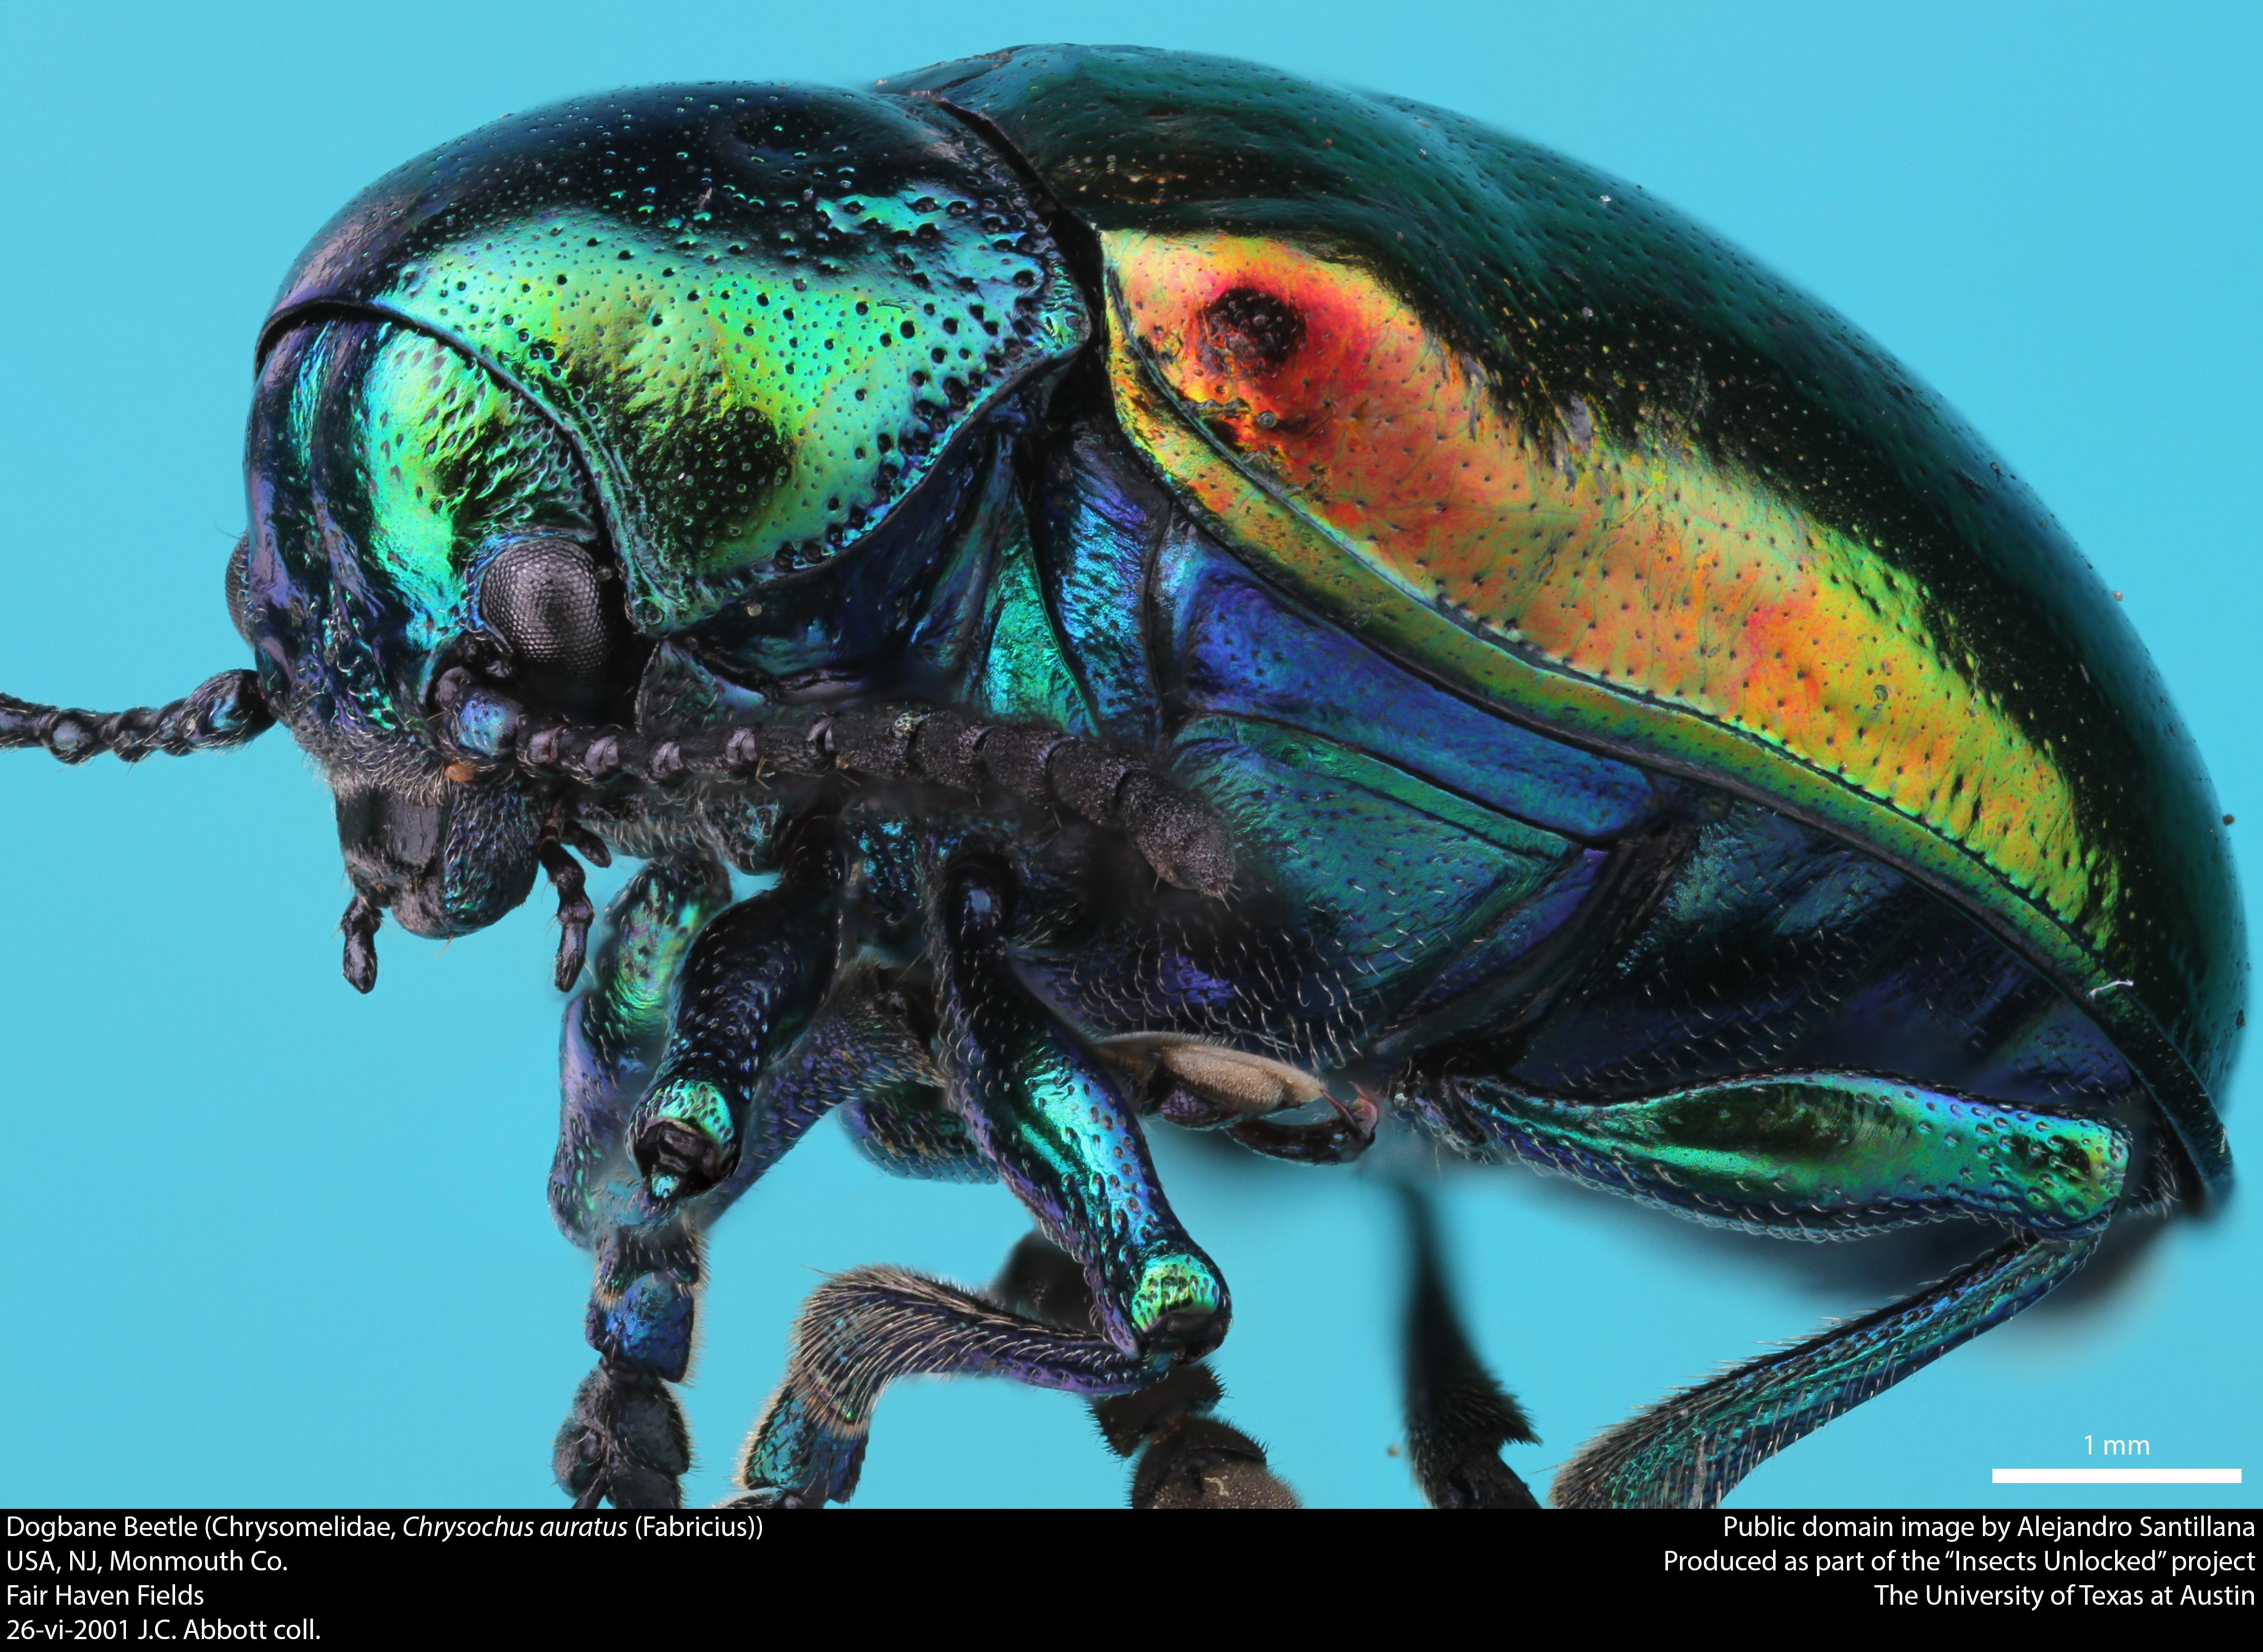 Dogbane beetle (chrysomelidae, chrysochus auratus (fabricius)) photo